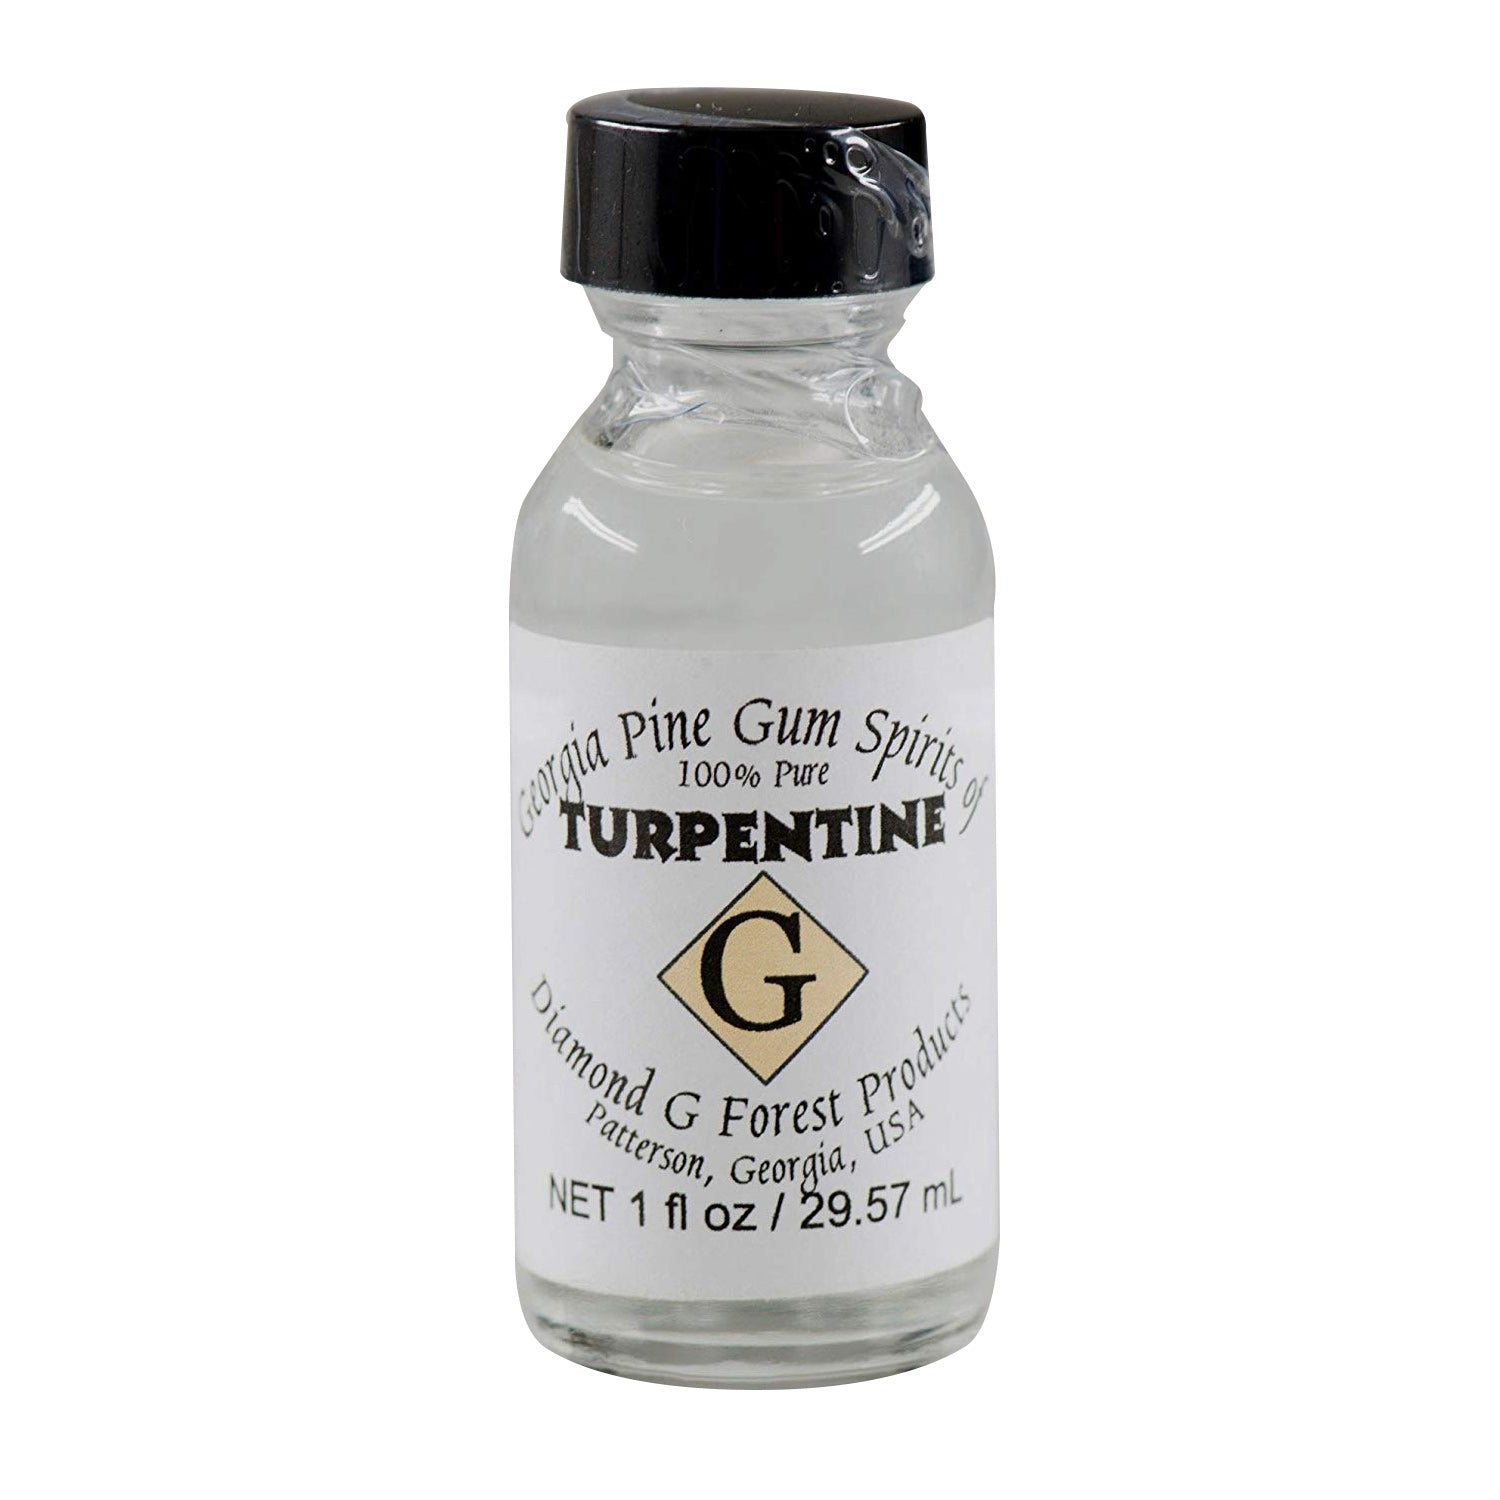 RealWildTurpentine - BOTTLE OF 4 OZ 100% GUM SPIRITS OF TURPENTINE